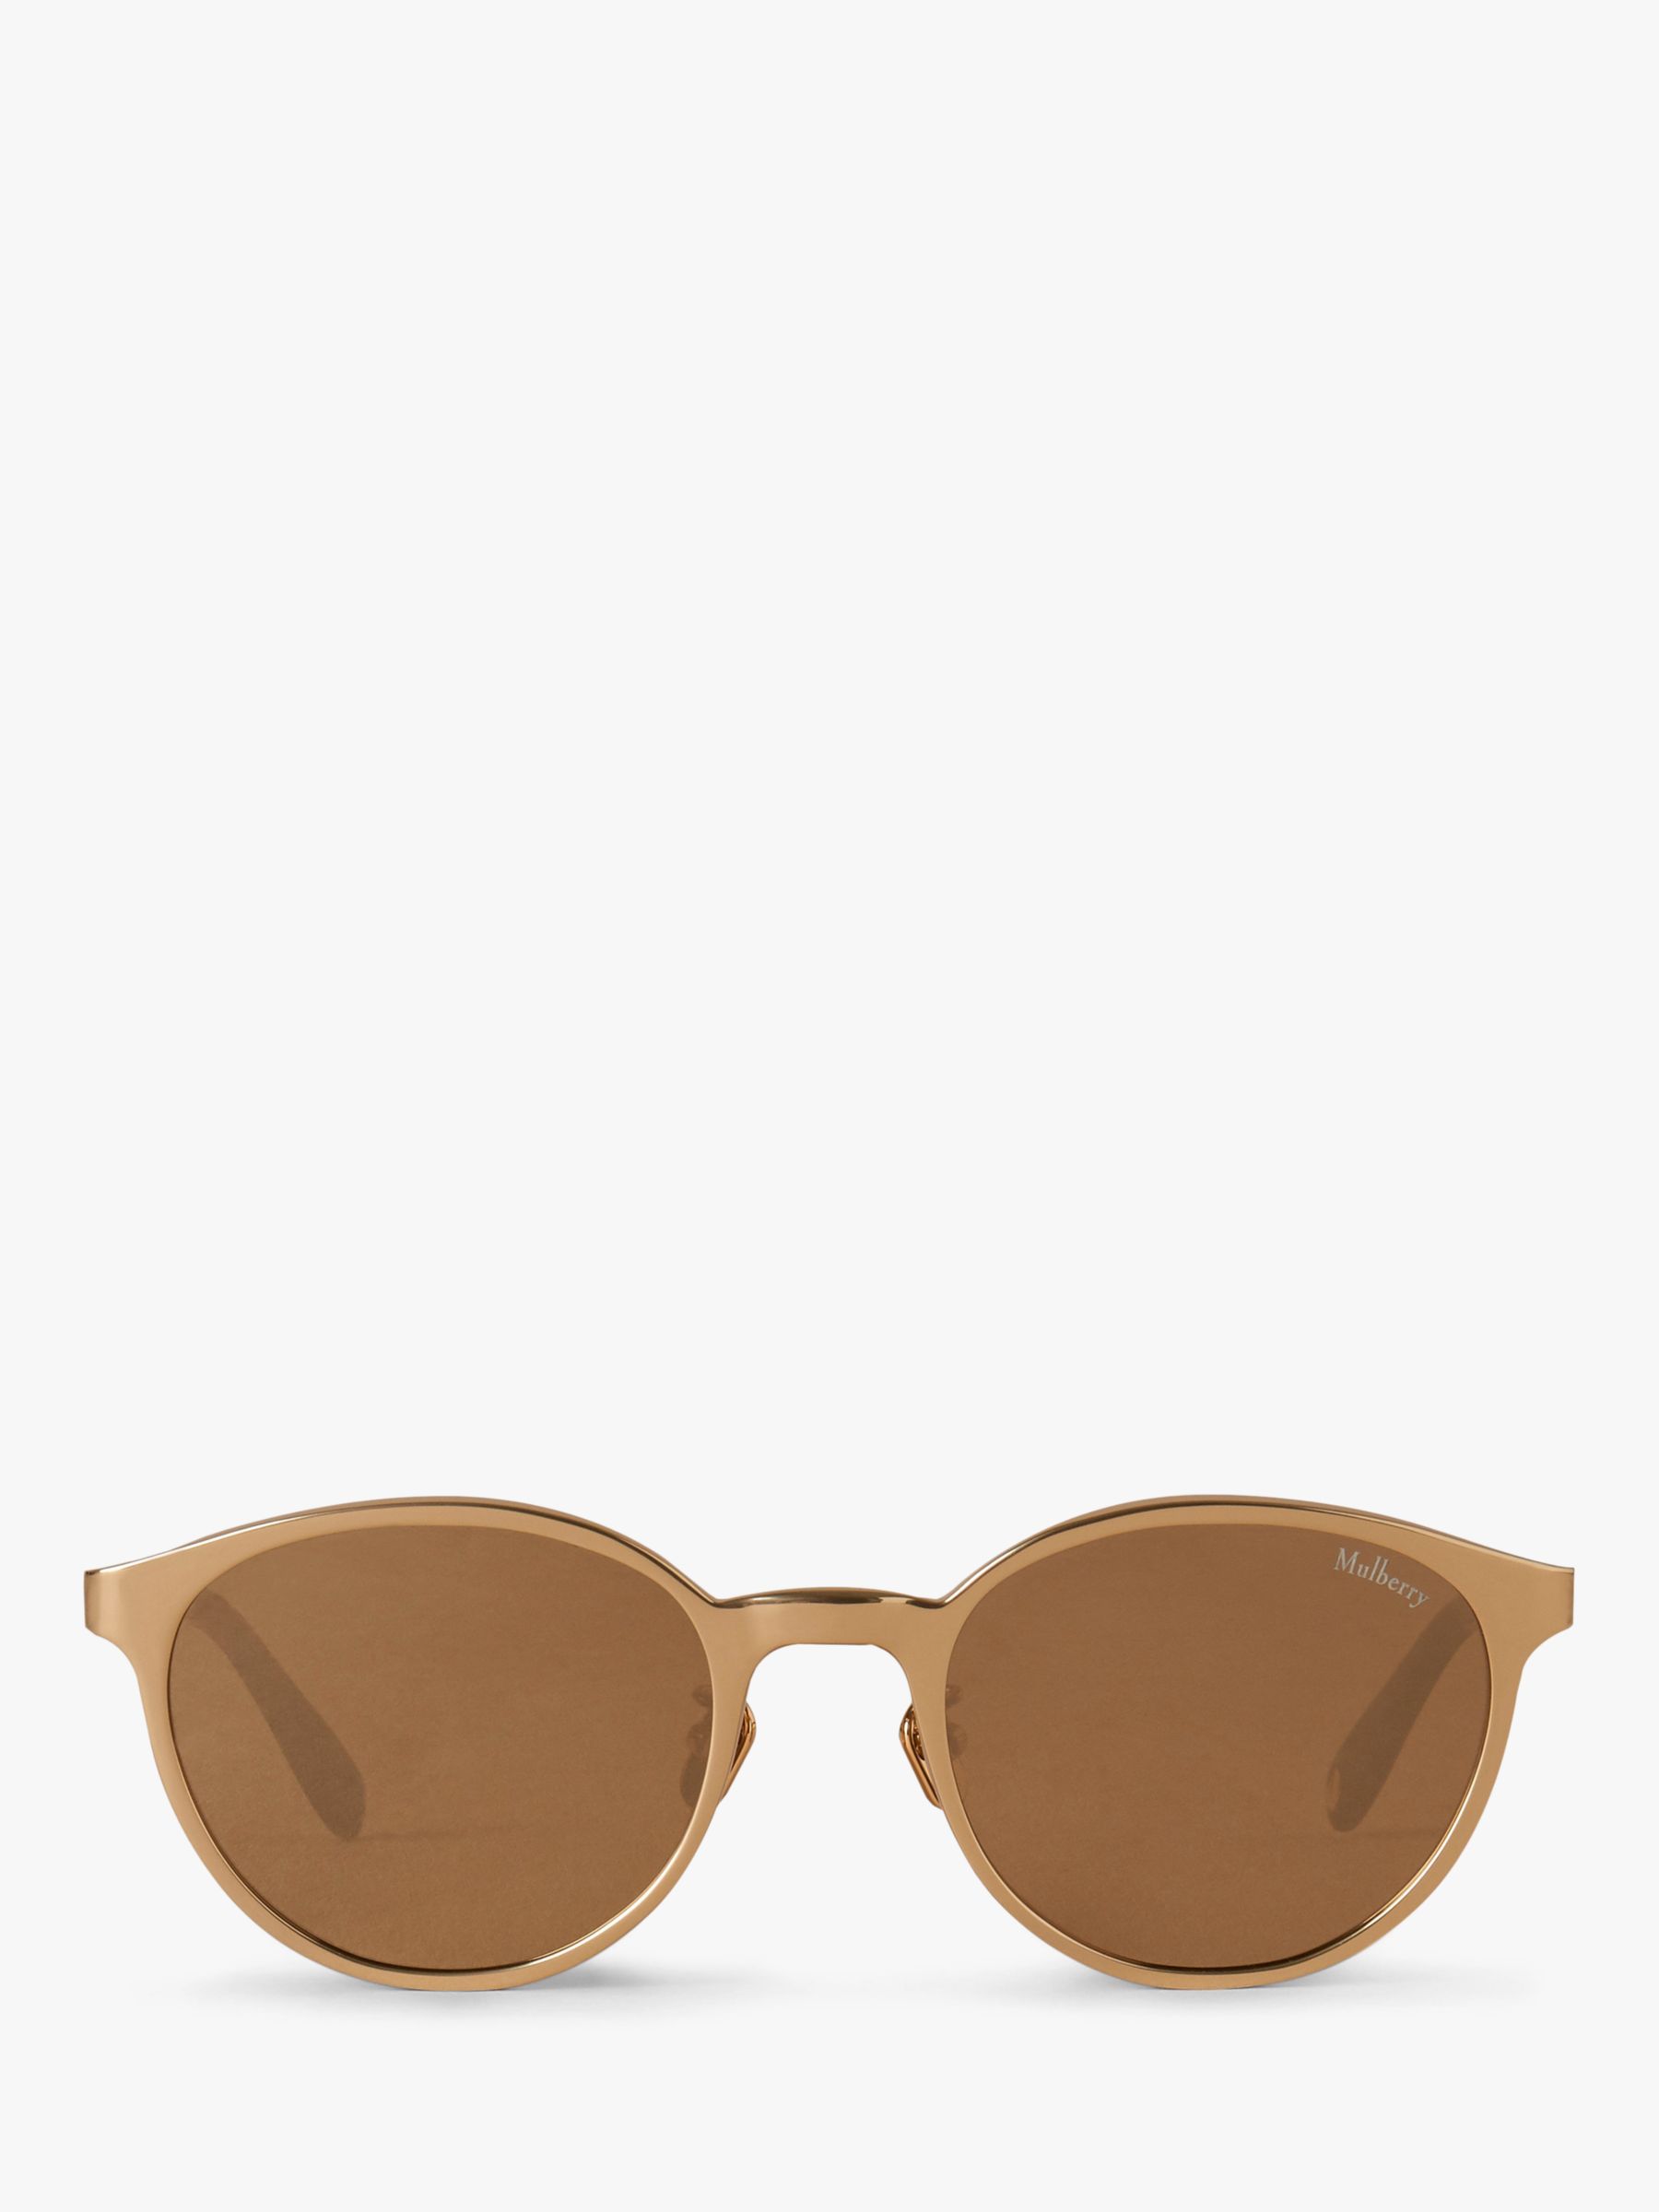 Mulberry Women's Sam Round Sunglasses, Gold at John Lewis & Partners